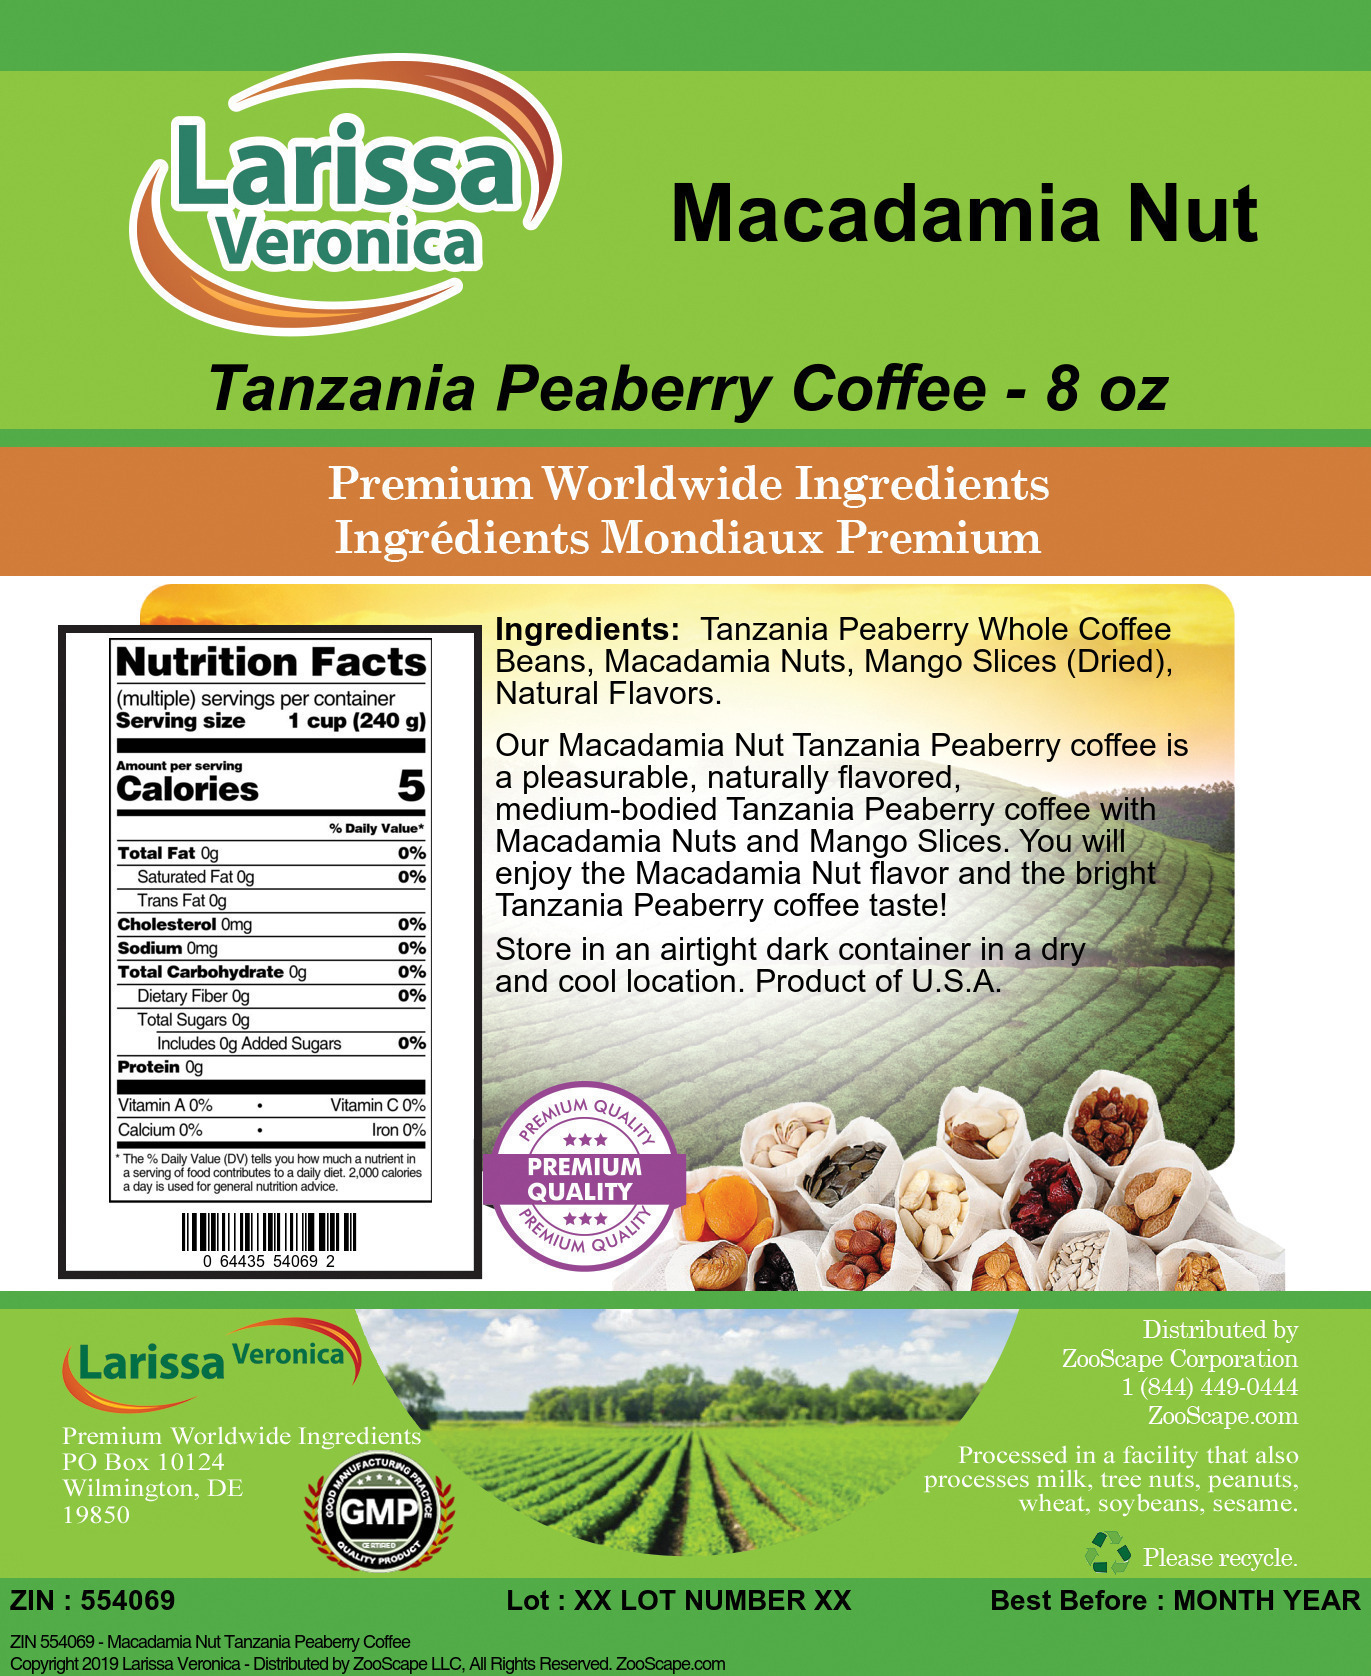 Macadamia Nut Tanzania Peaberry Coffee - Label